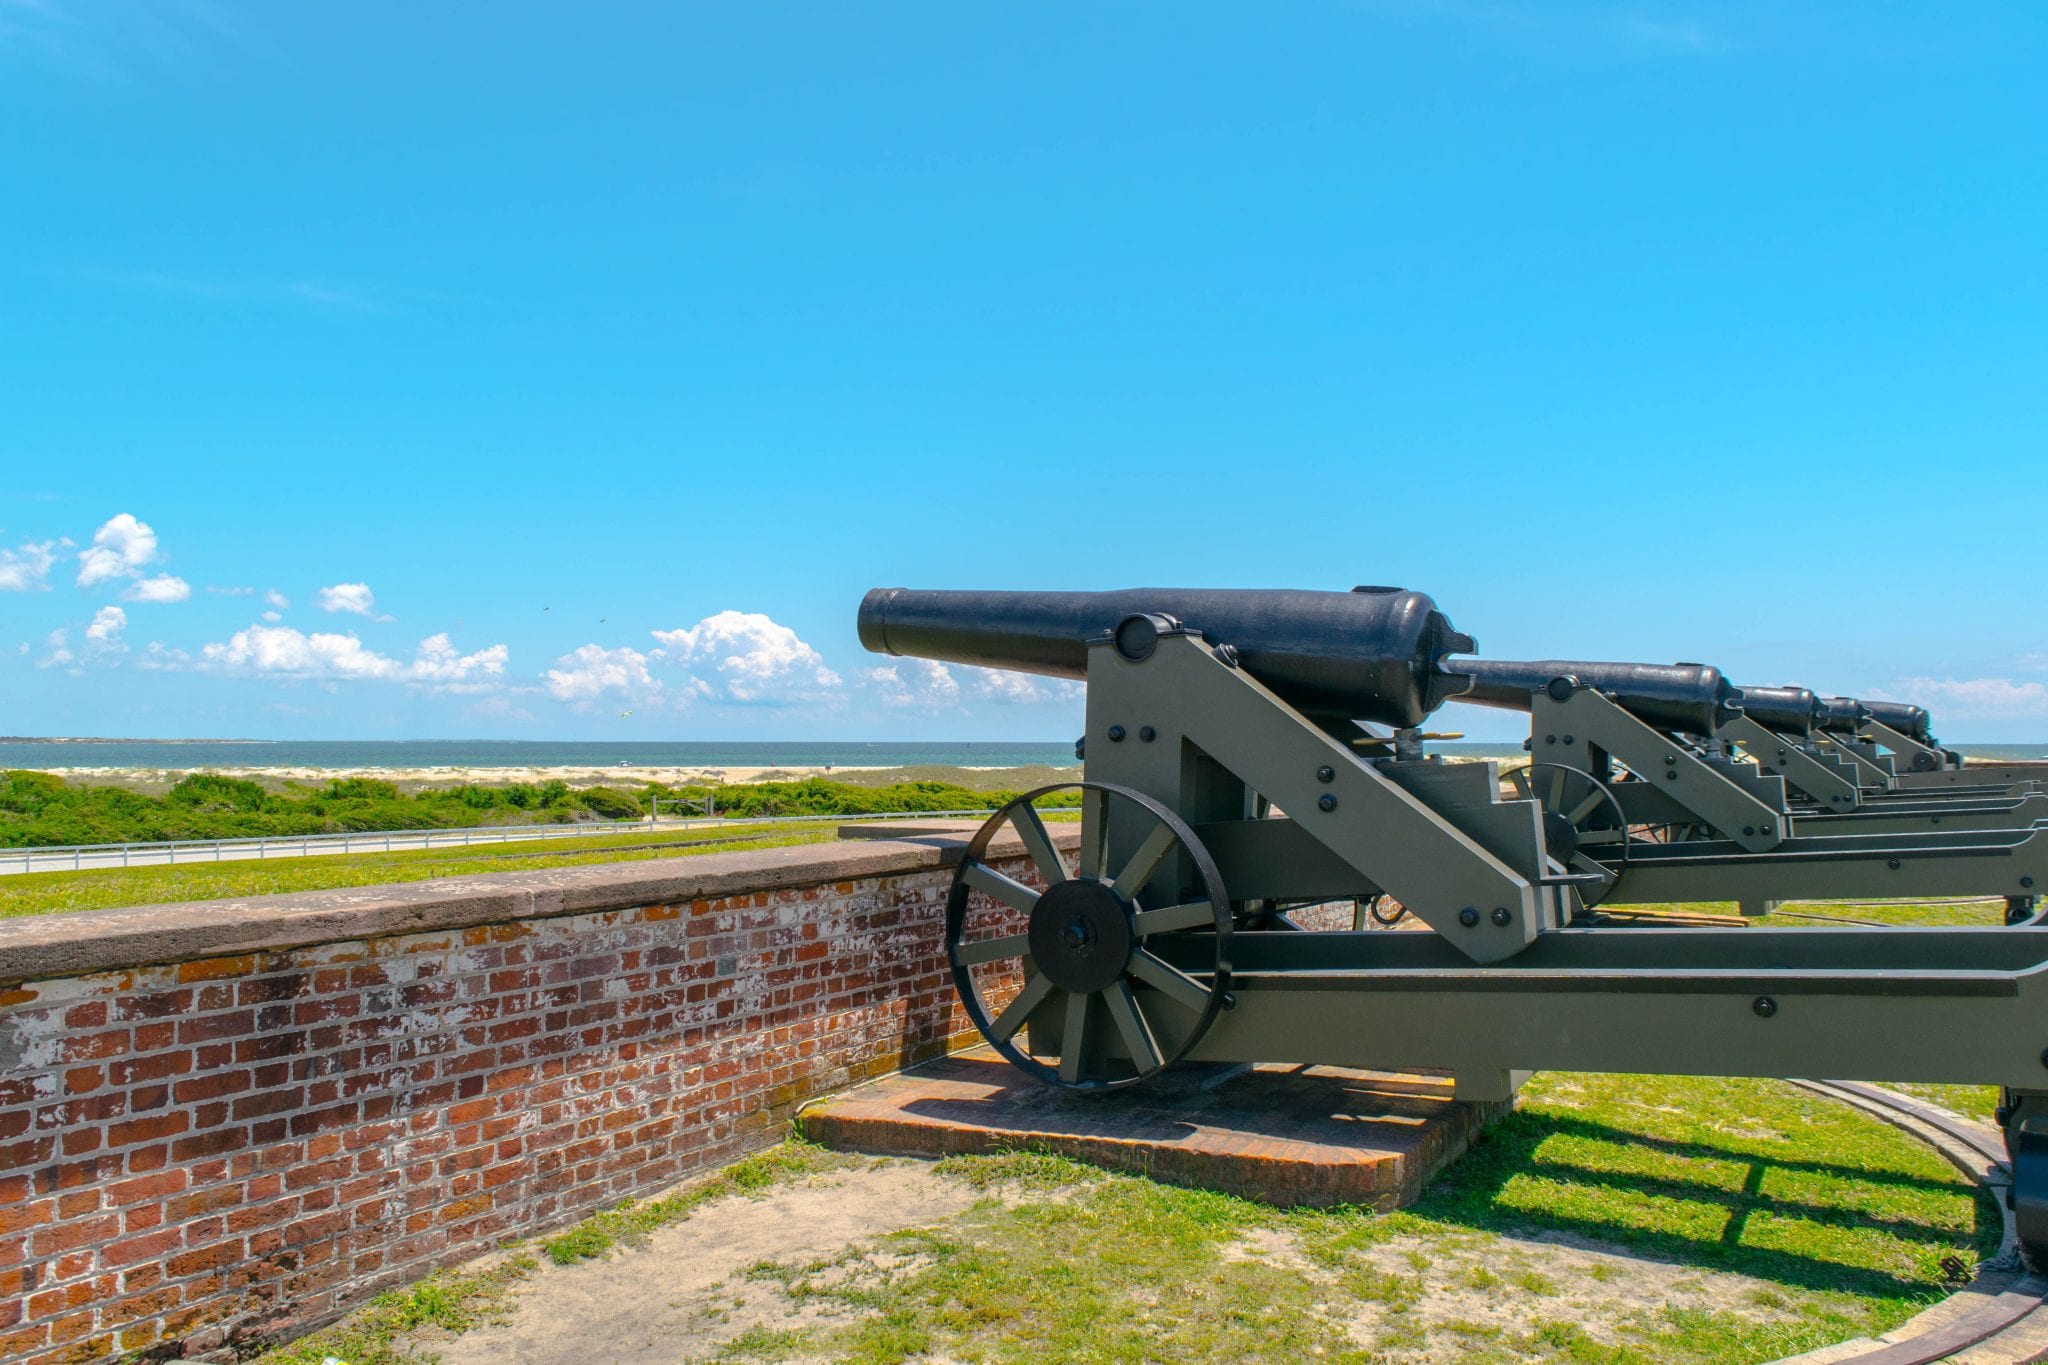 大炮俯瞰着Fort Macon NC与海滩在远处可见